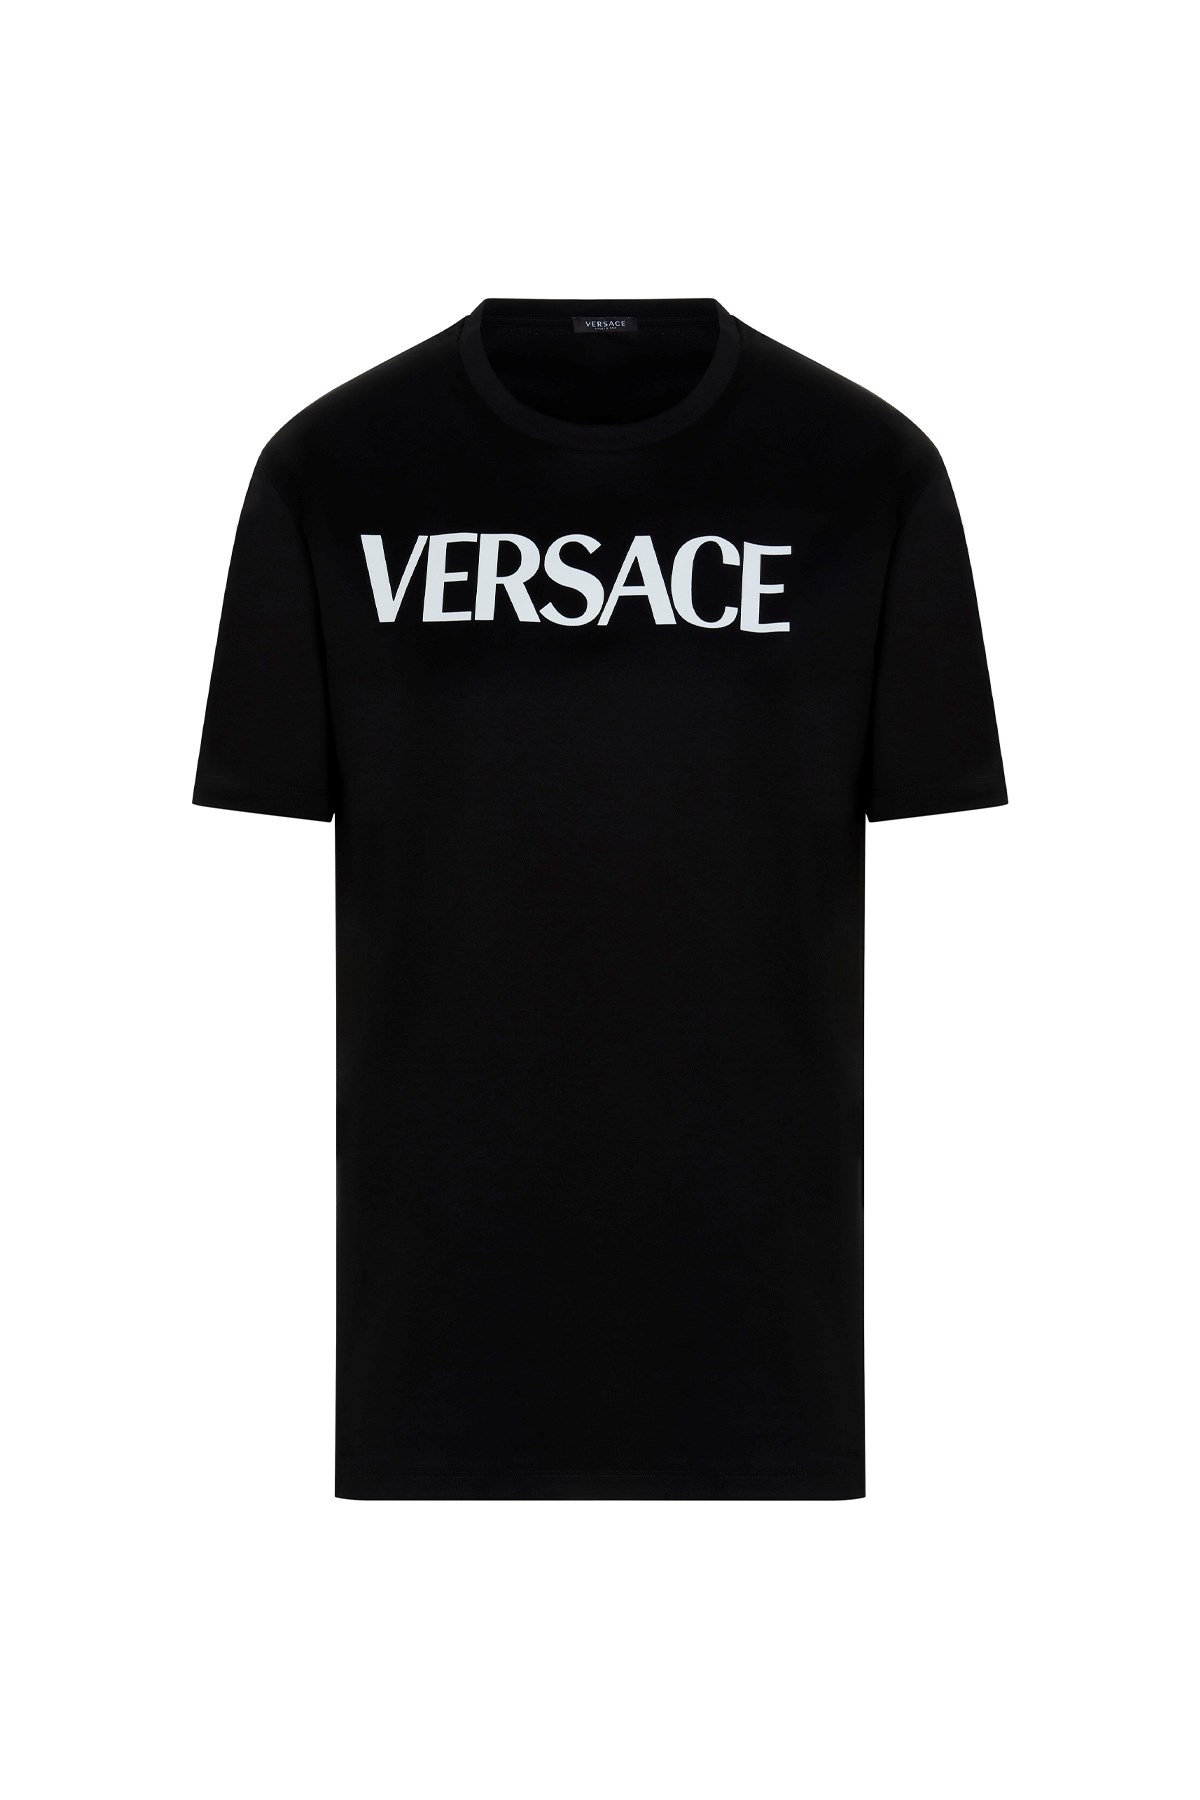 VERSACE 'Smiley Print’ T-Shirt